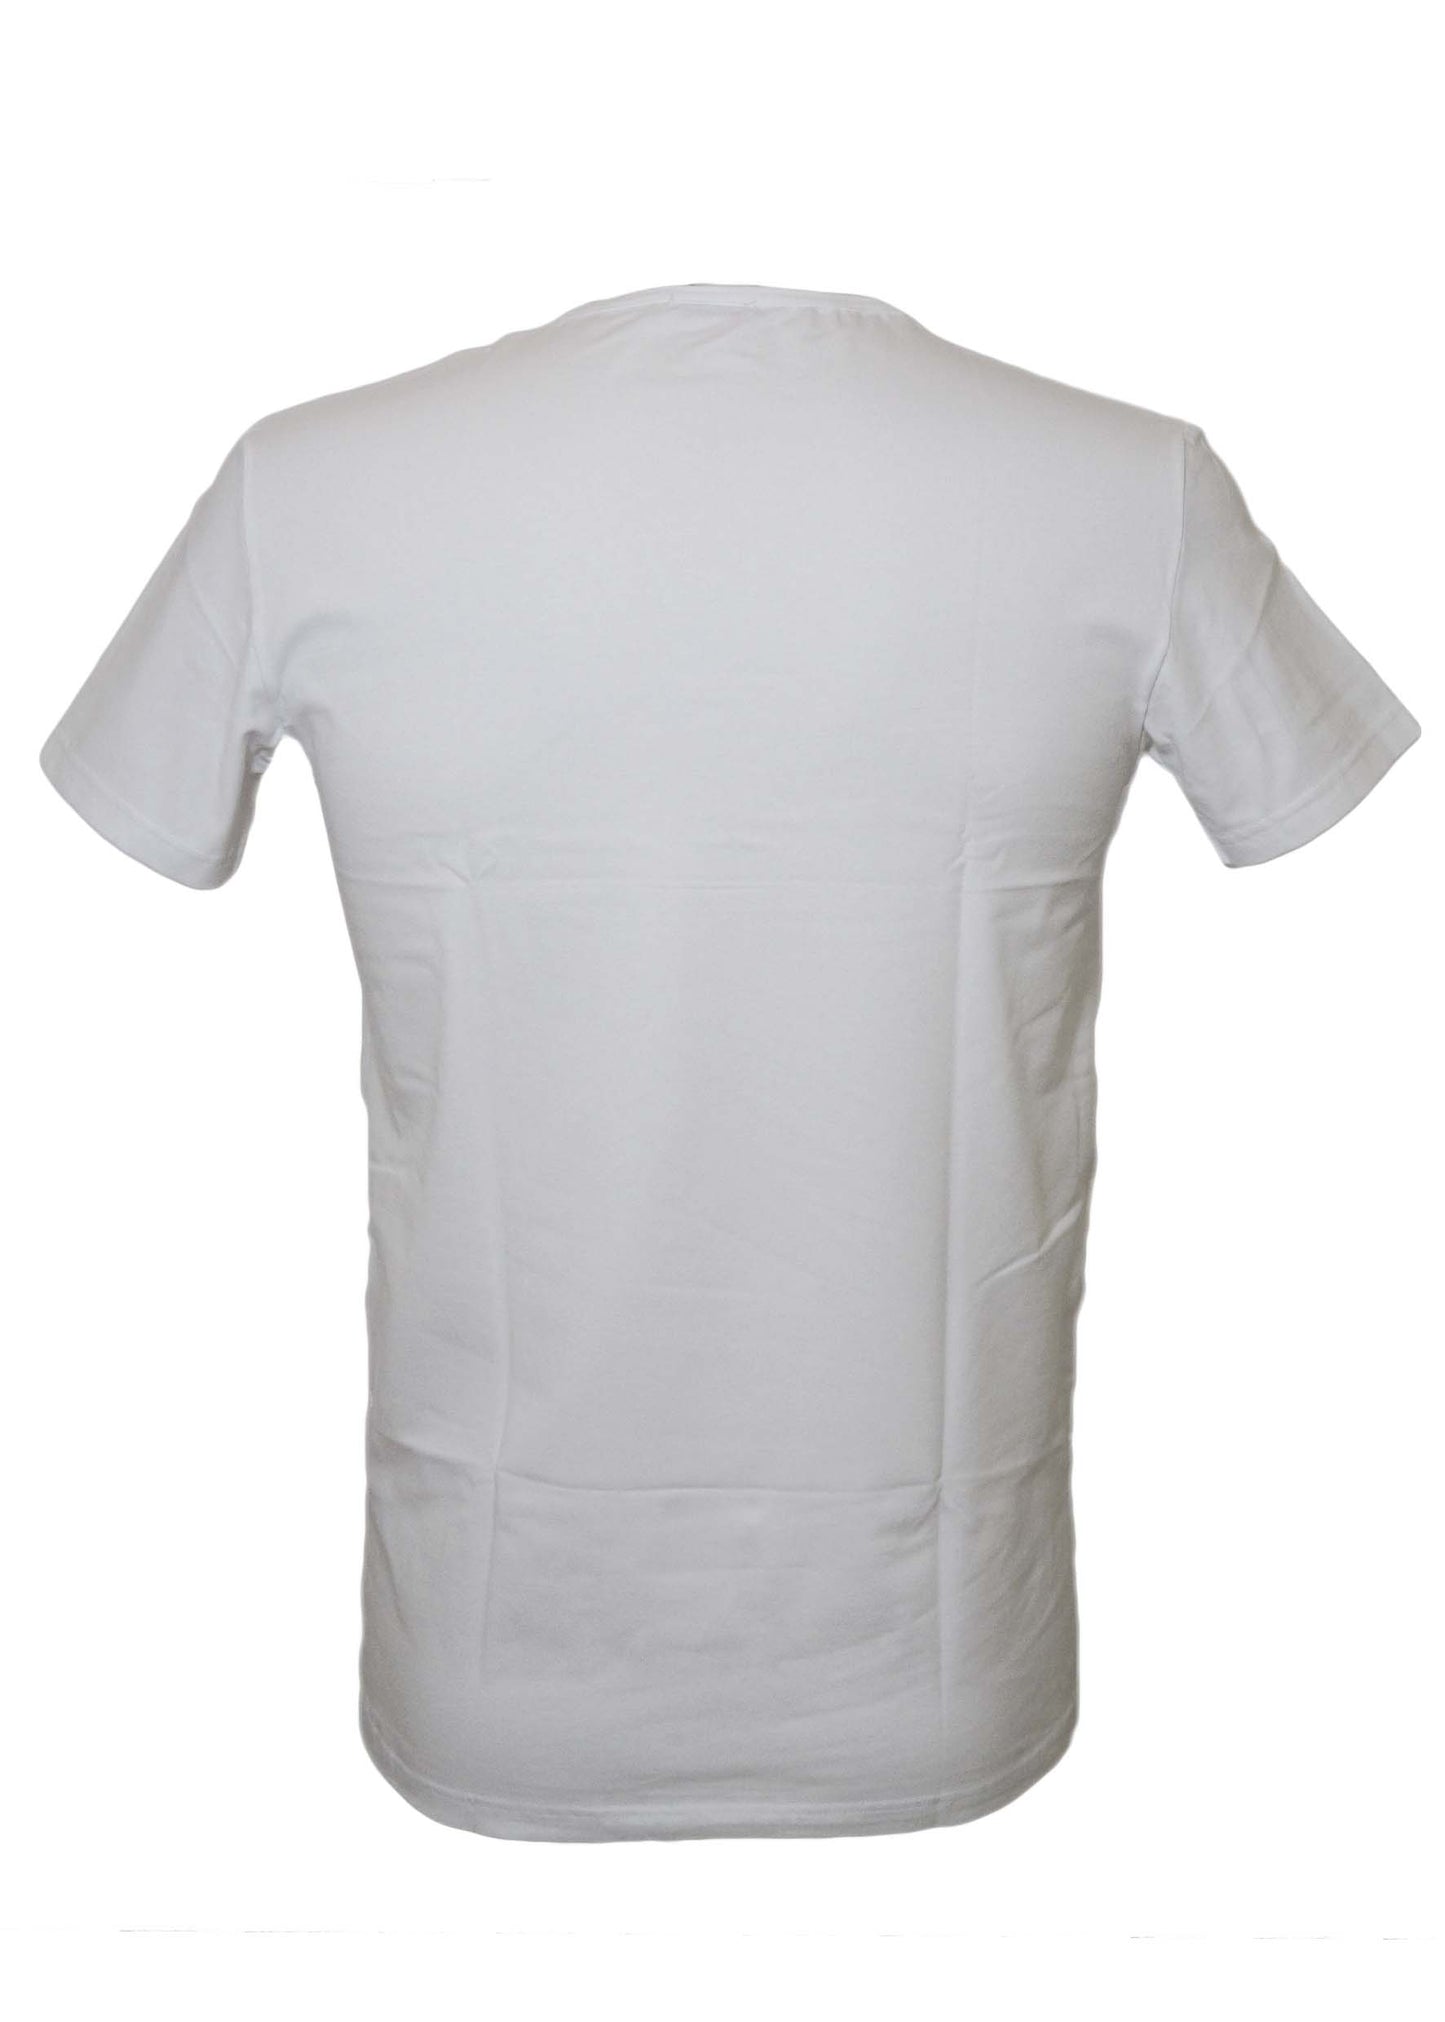 Albenere - 1103 - T-shirt